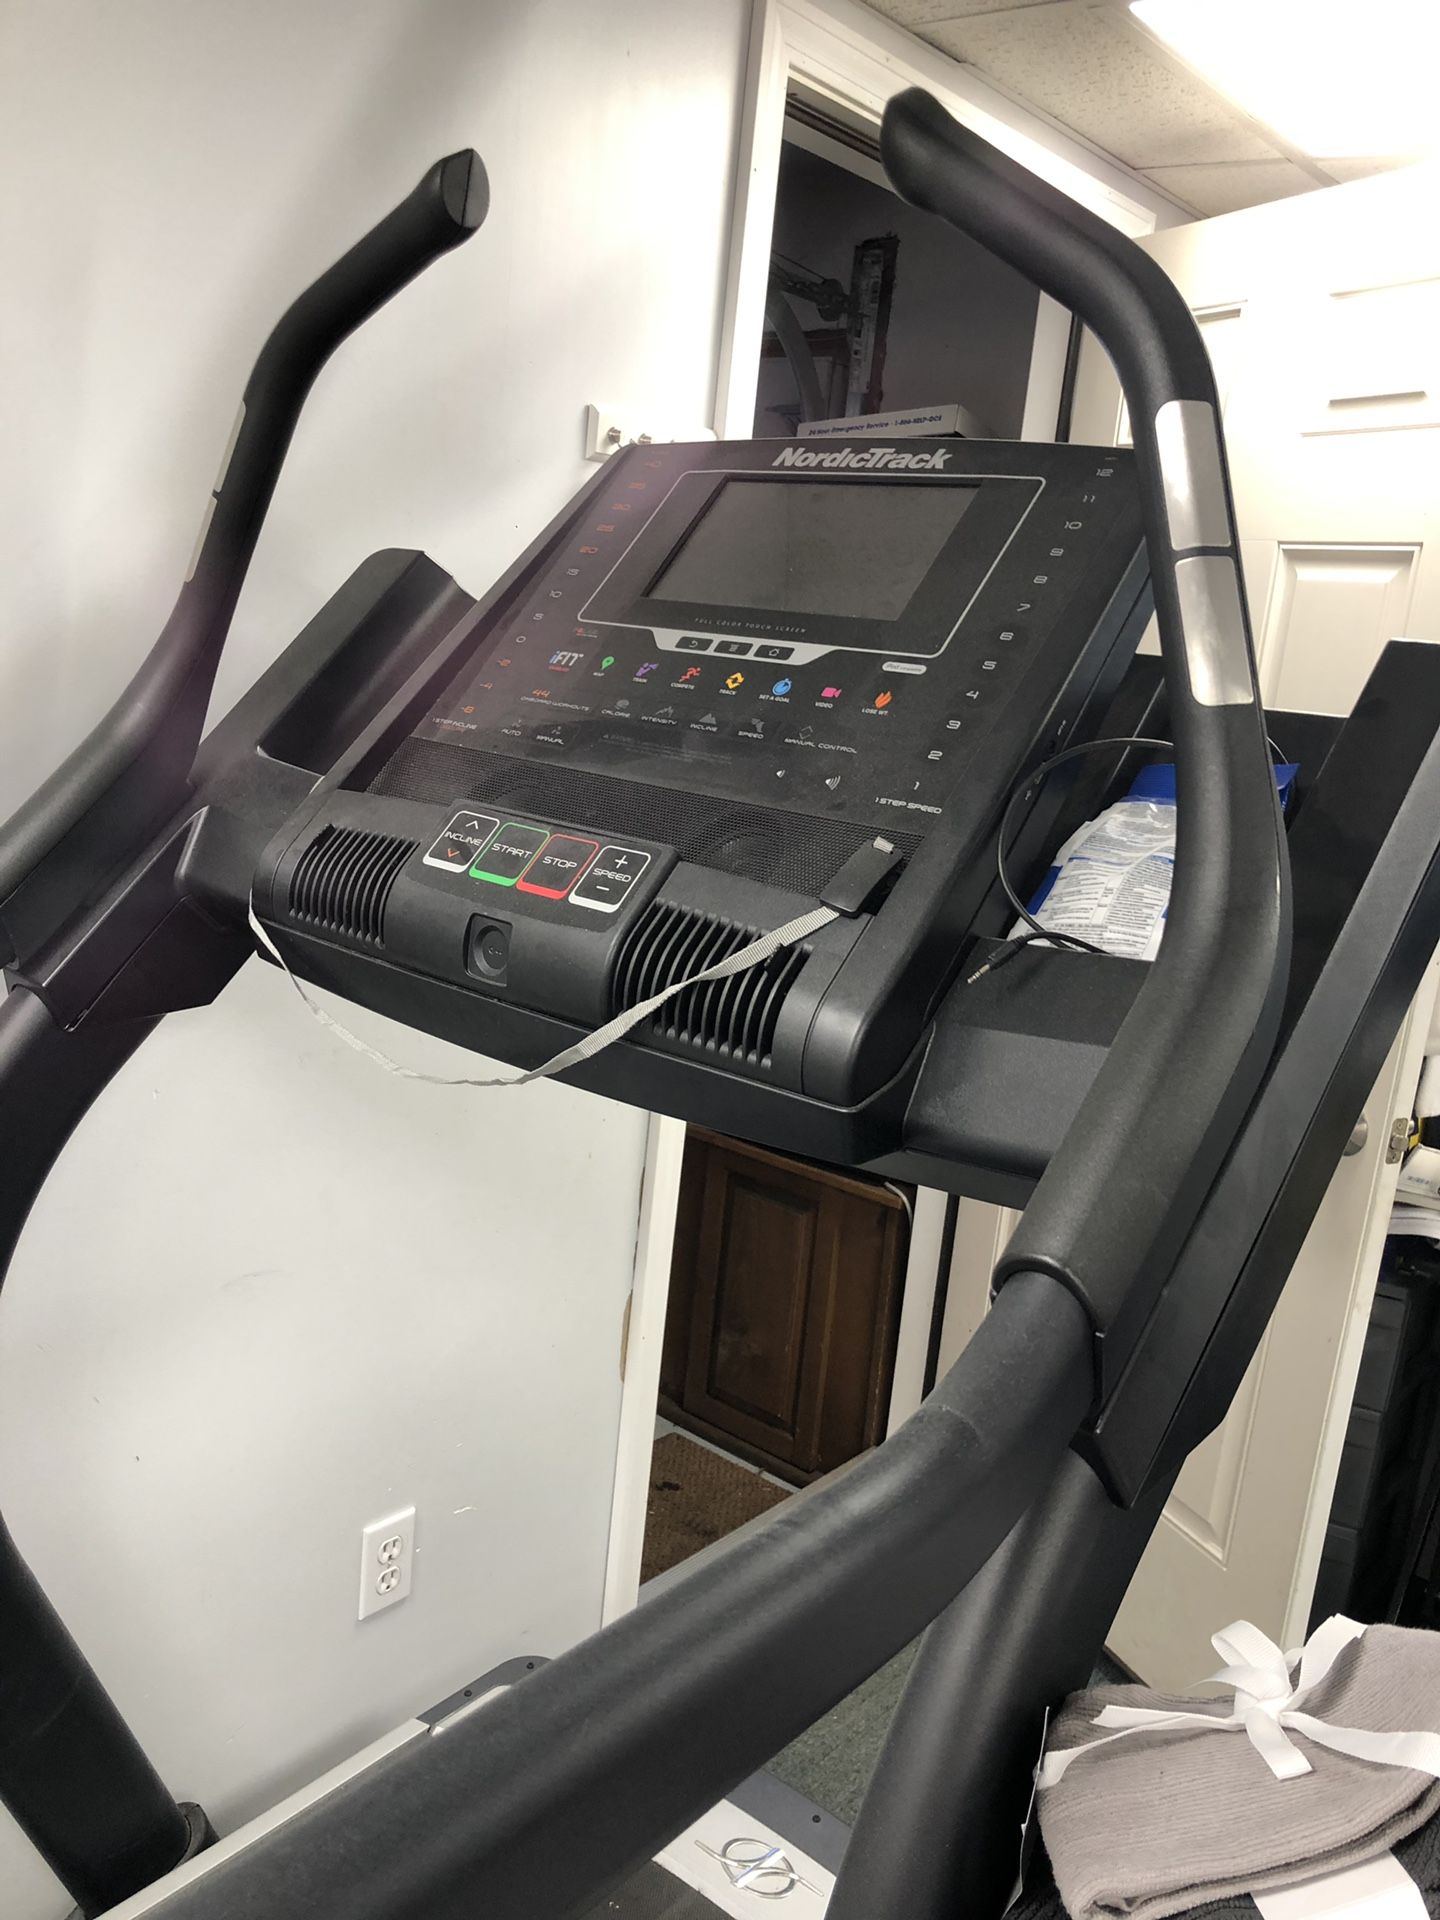 Nordictrack x11i Treadmill for sale